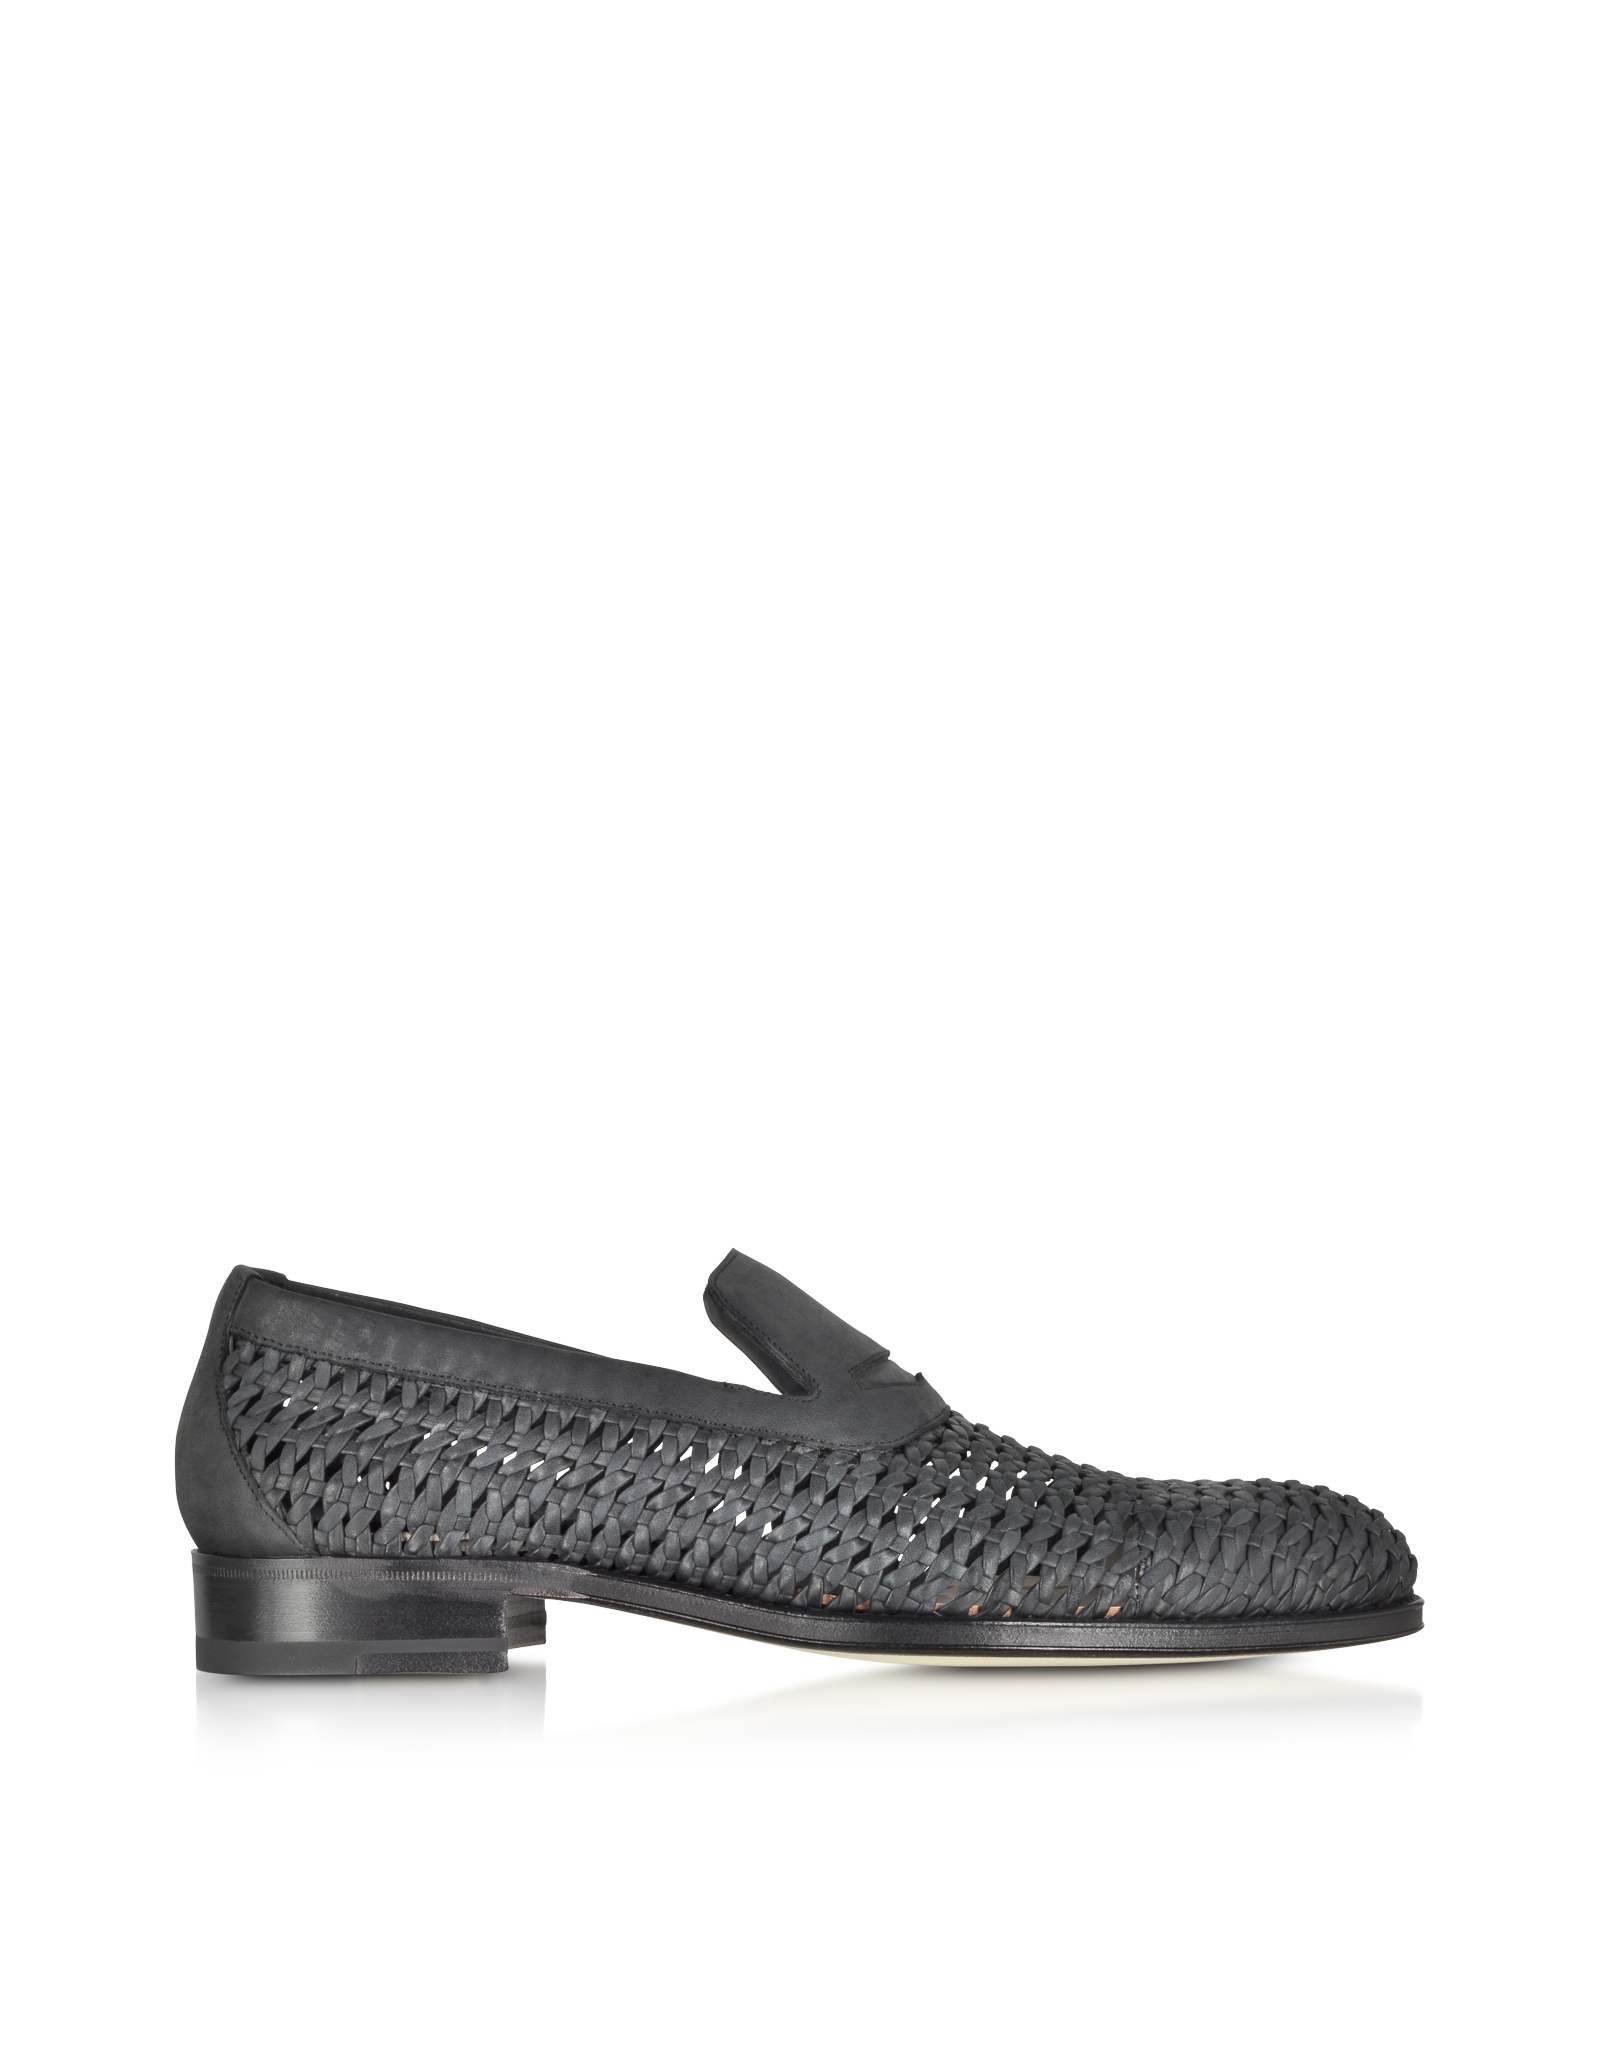 Lyst - A.Testoni Black Woven Leather Slip-on Shoe in Black for Men